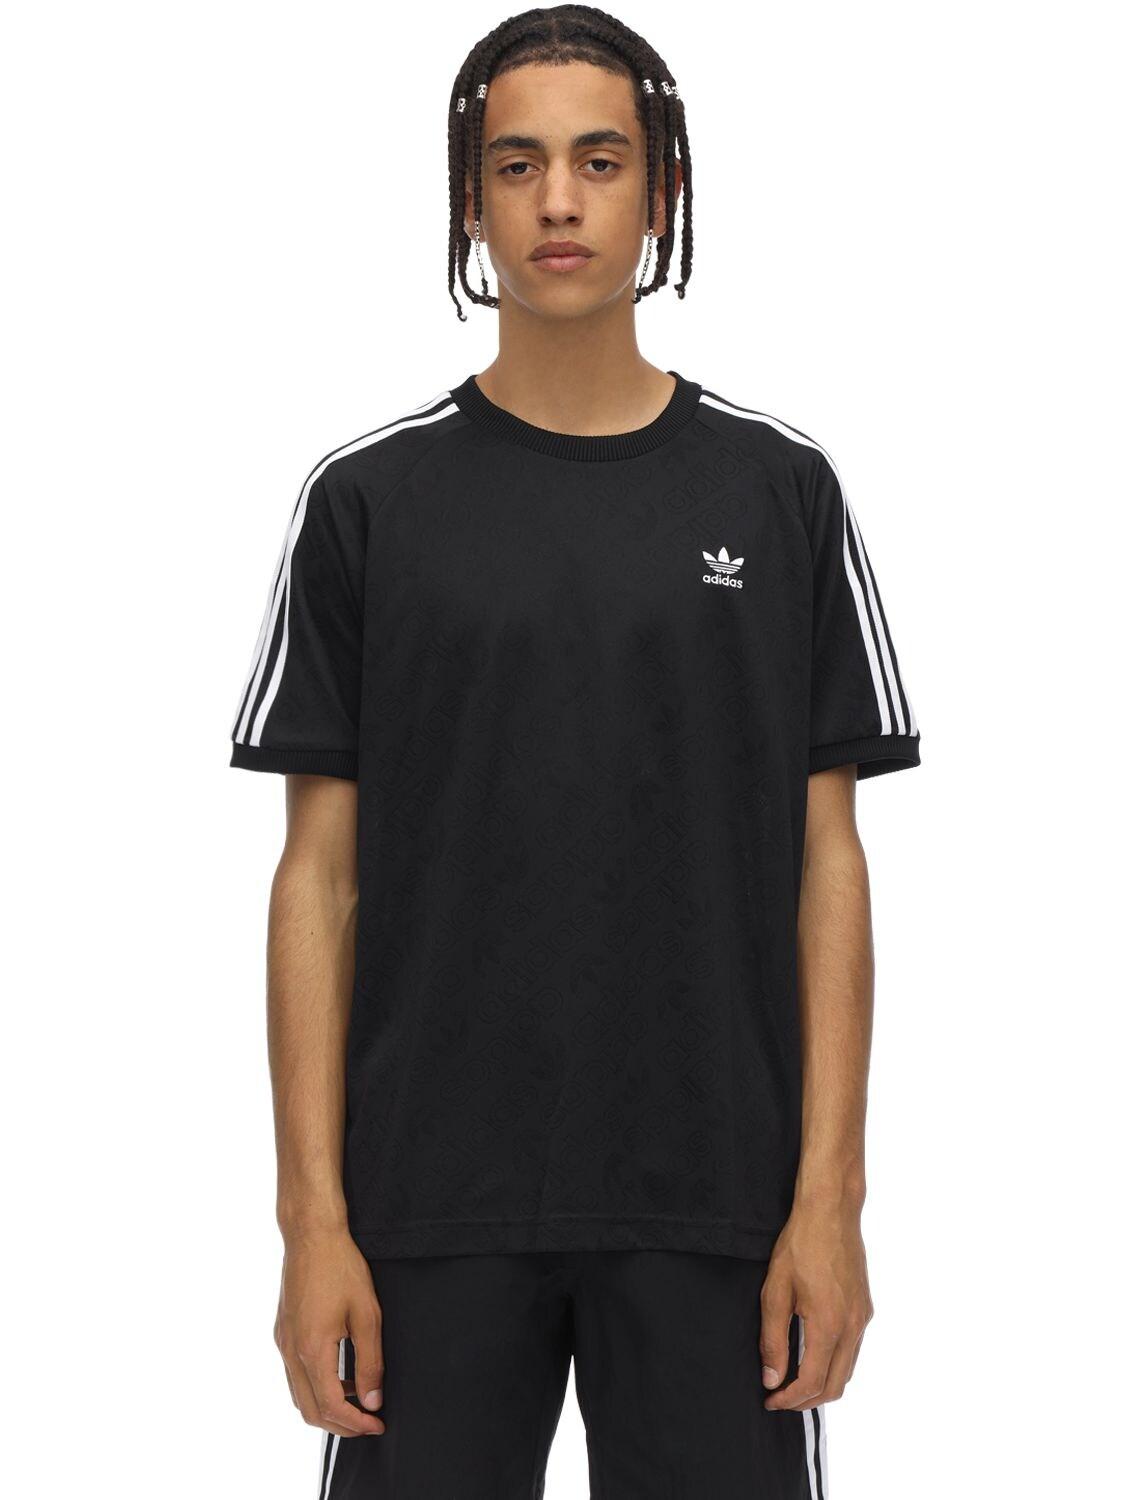 adidas Originals Mono Jersey T-shirt in Black for Men - Lyst